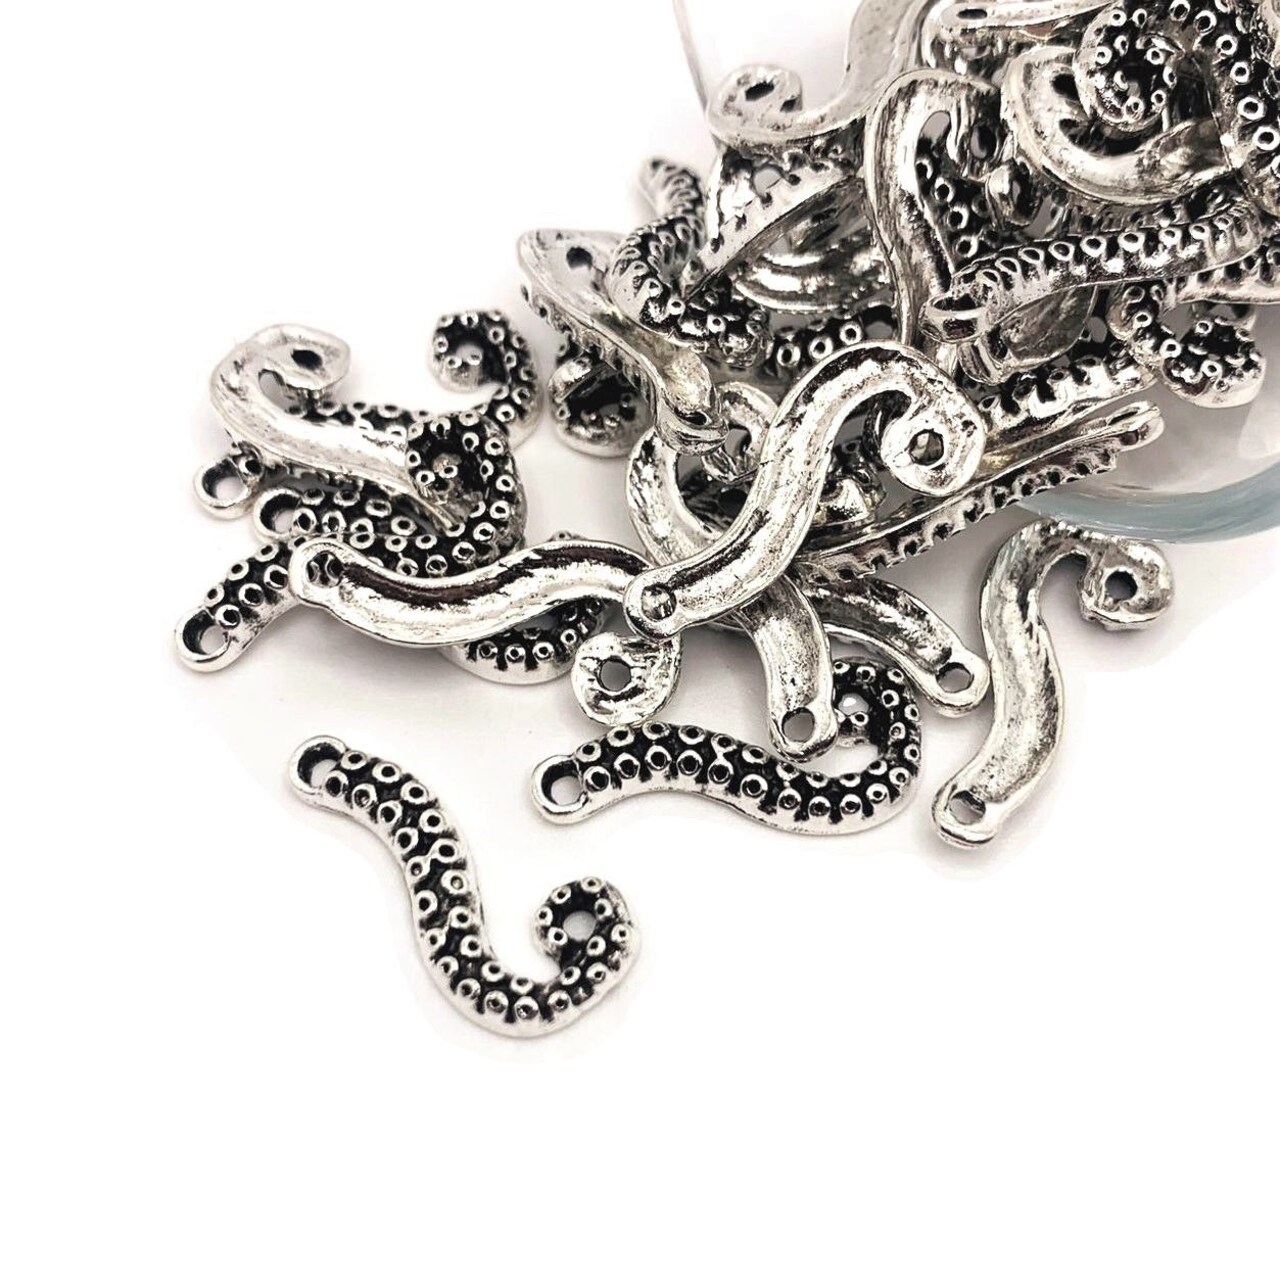 1, 4, 20 or 50 Pieces: Silver Octopus Charm Connectors